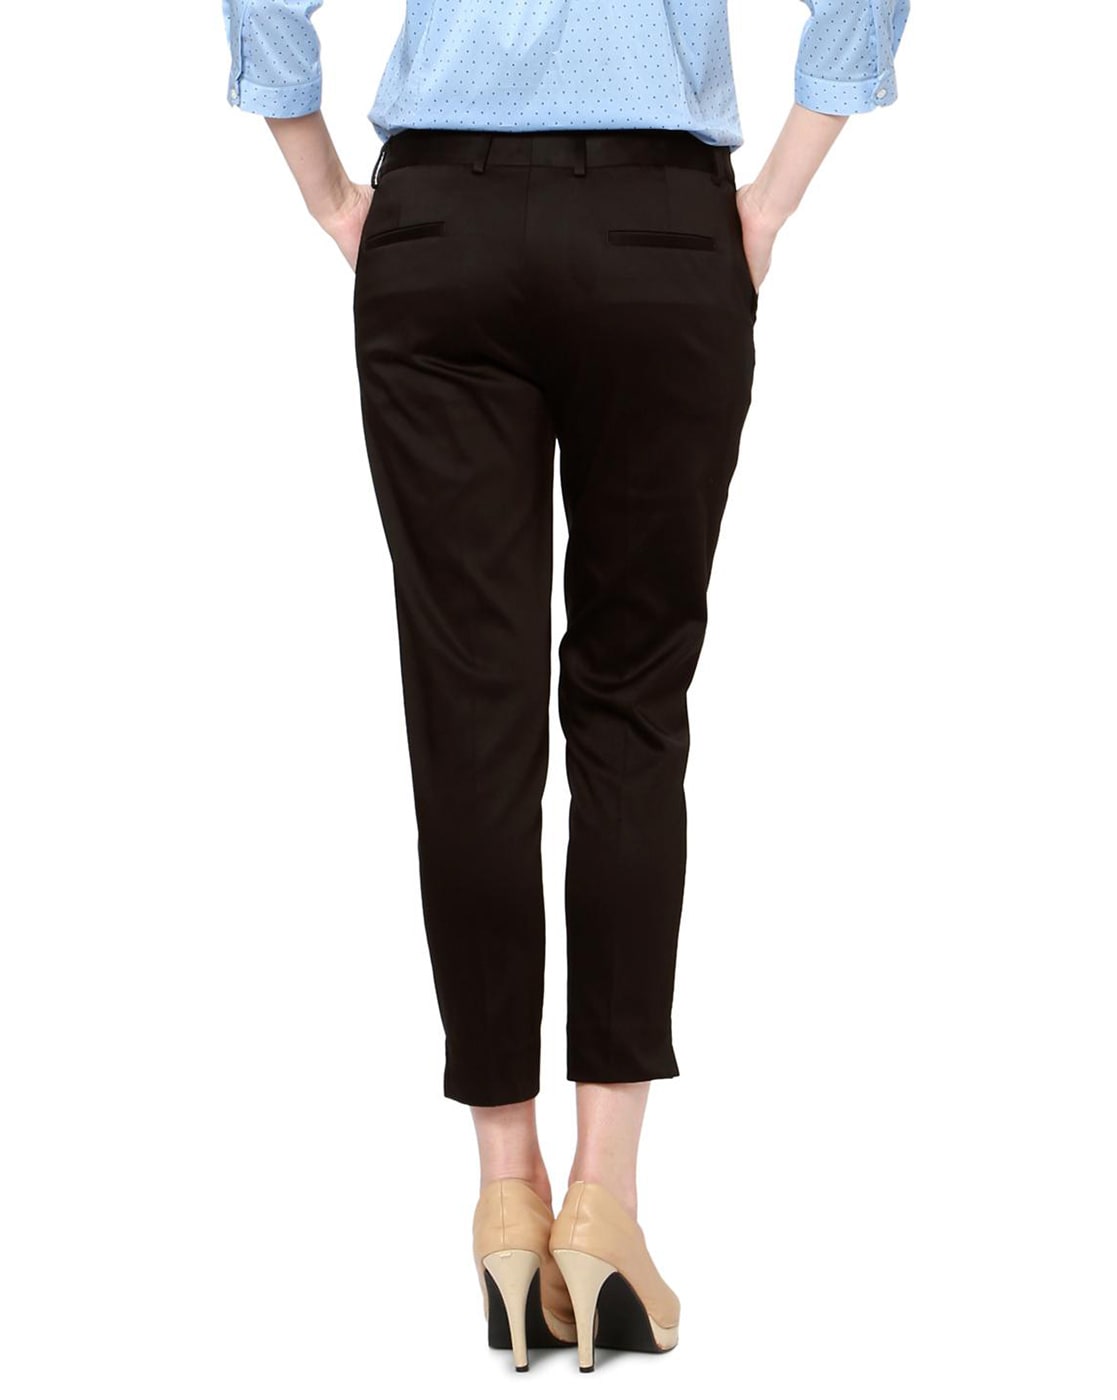 Buy Allen Solly Trousers online - Women - 123 products | FASHIOLA.in